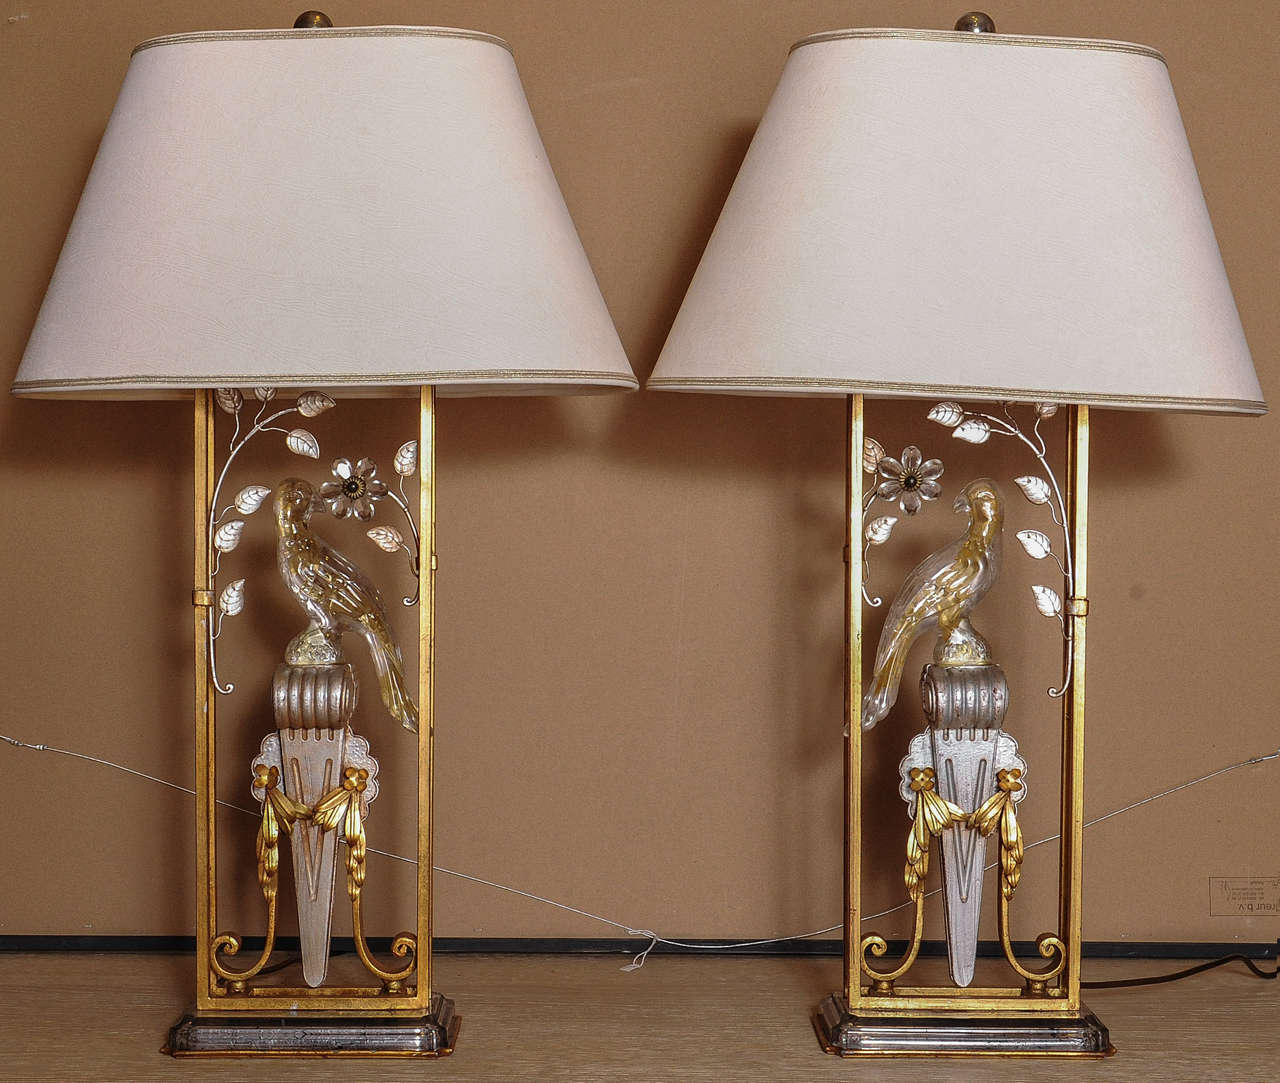 A rare pair of tablelamps with a parrot motive, maison Bagues, France

.